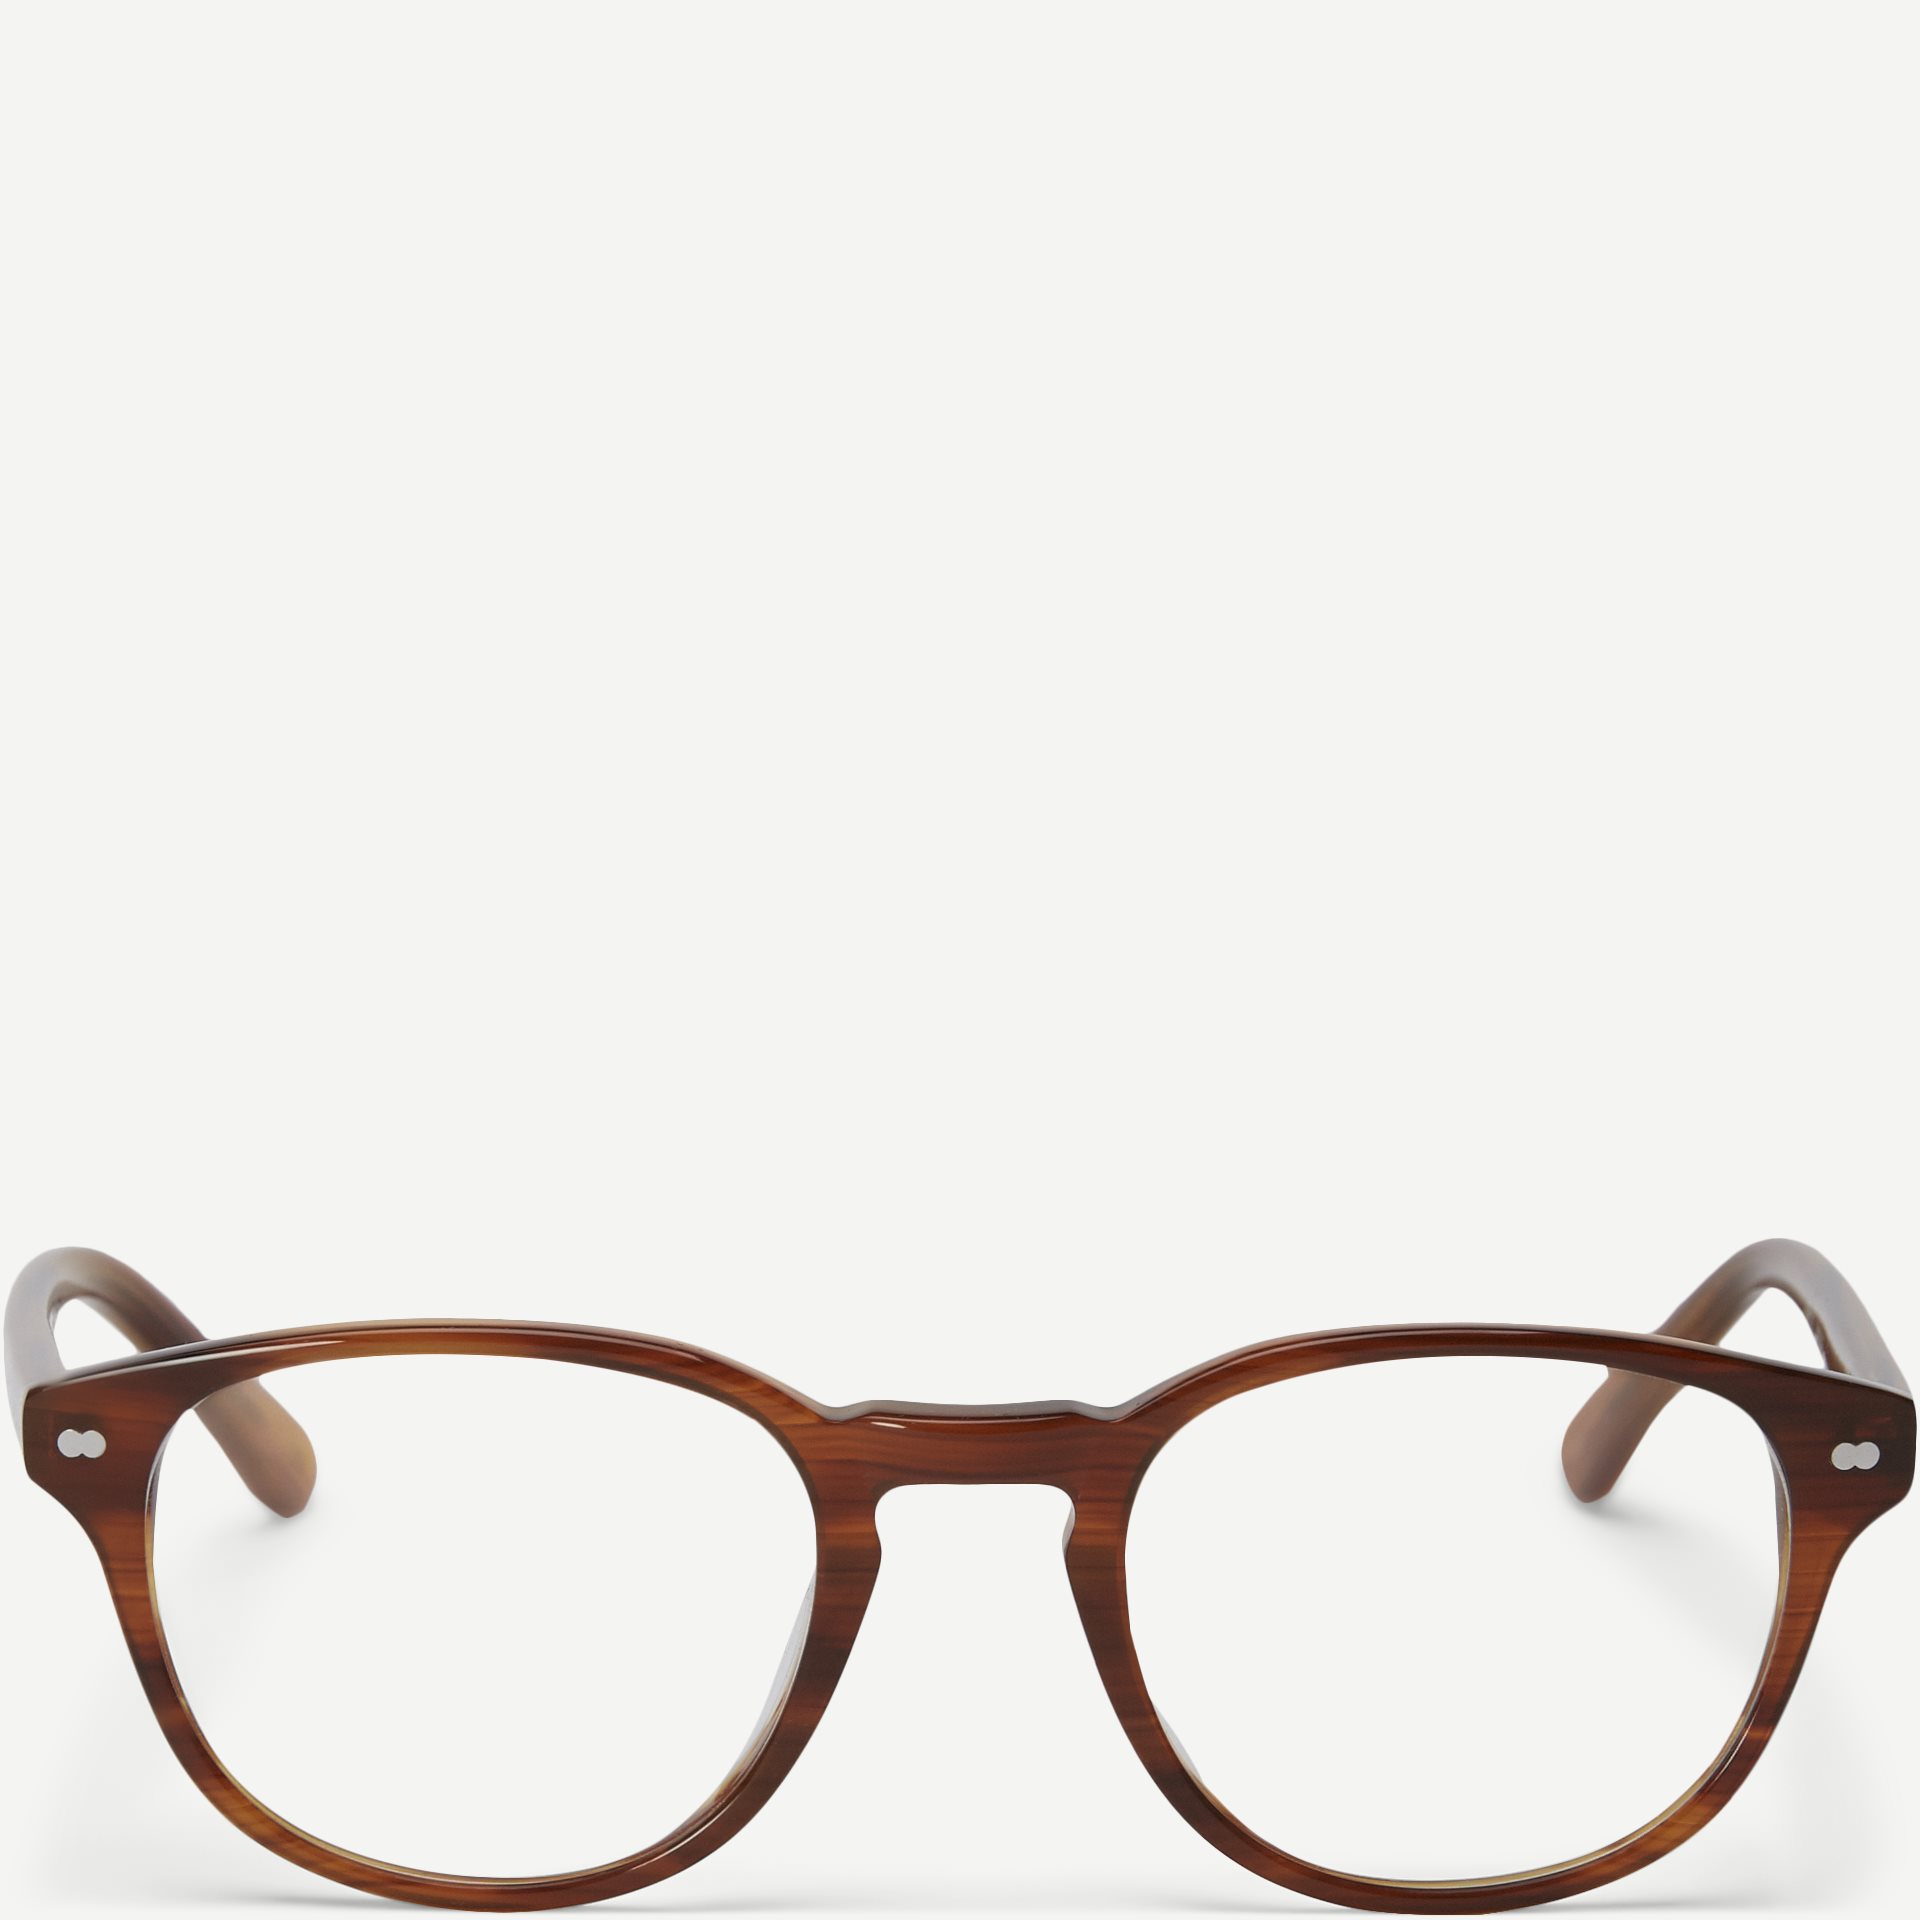 Mala Blue Light Glasses - Accessories - Brown